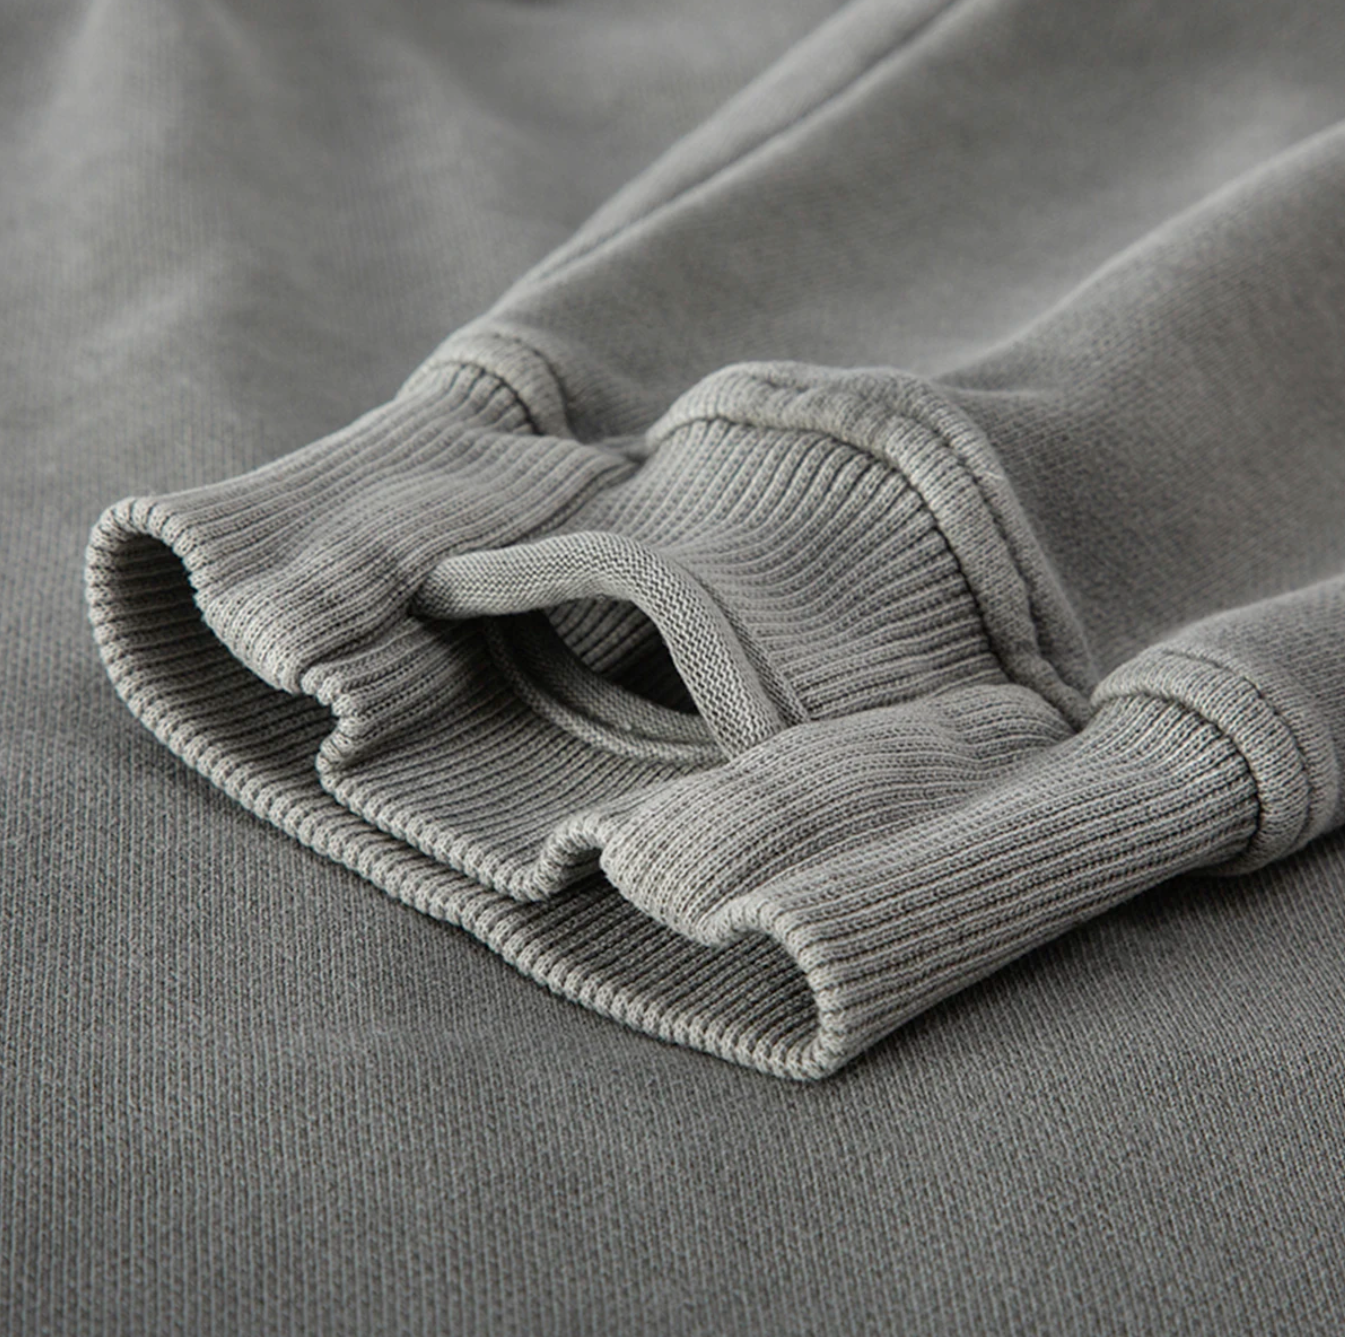 Garment fabric sleeve close up 